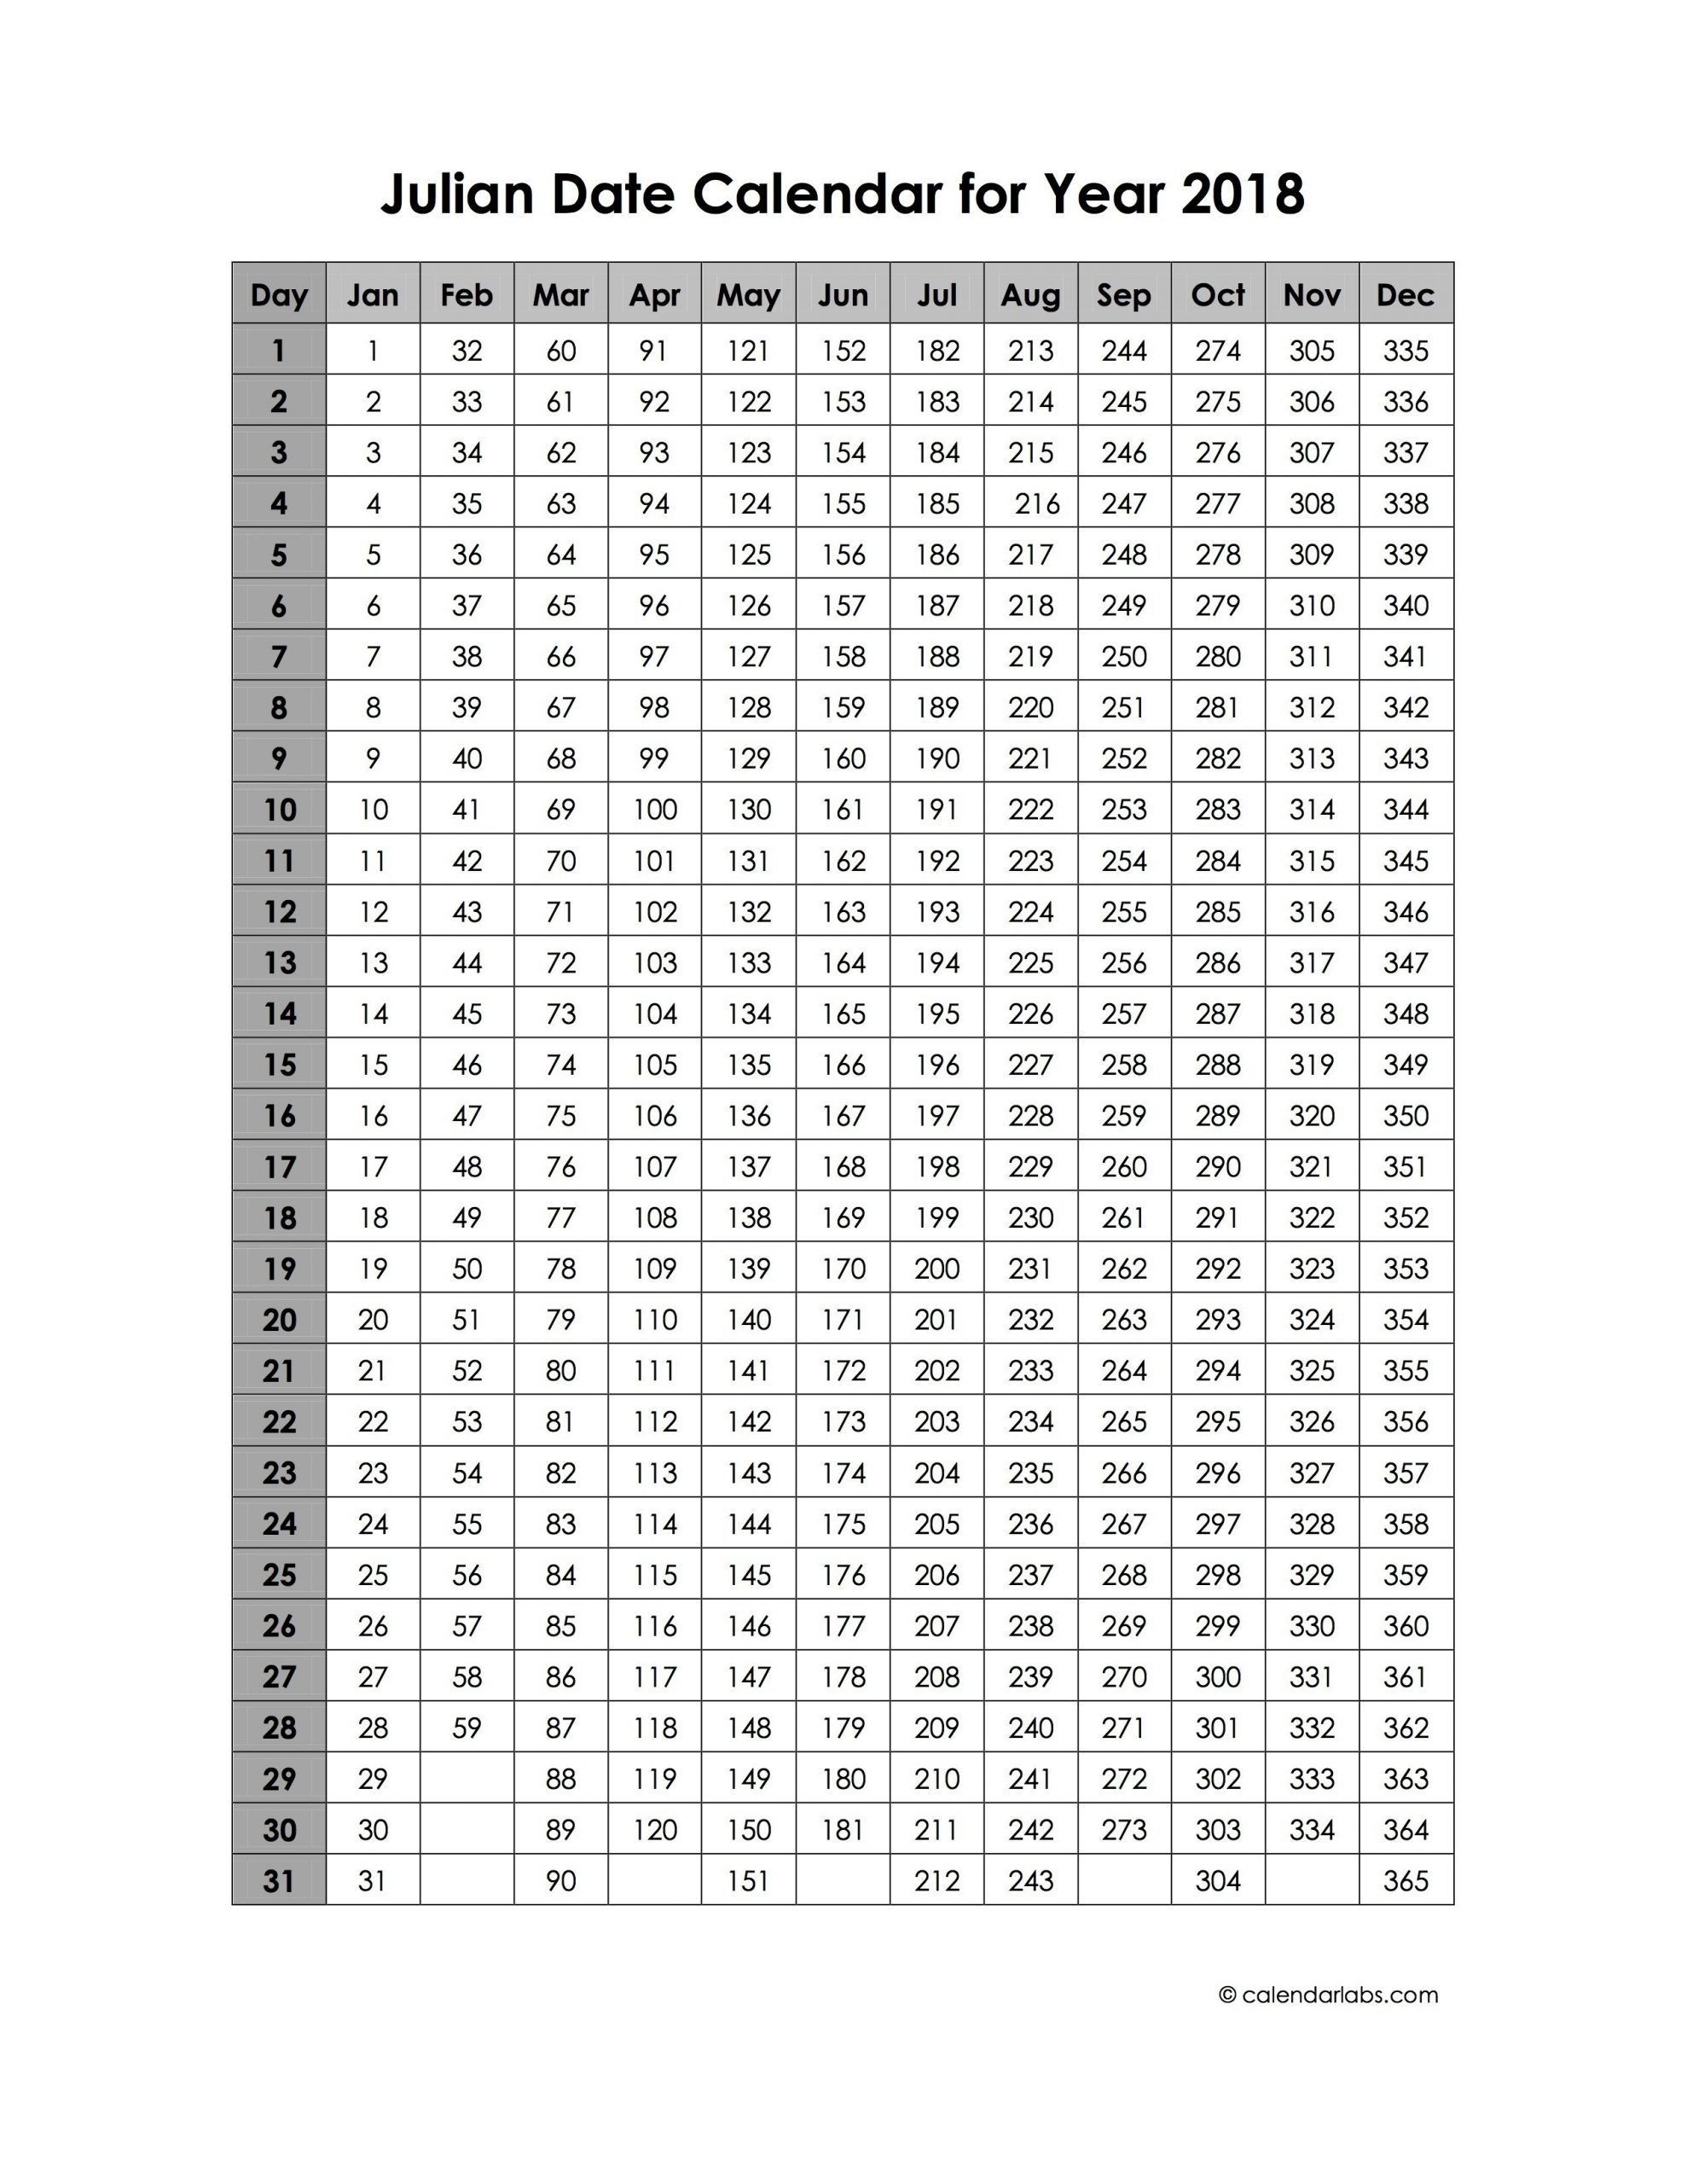 Non Leap Year Julian Calendar Printable | Example Calendar Perpetual Julian Date Calender